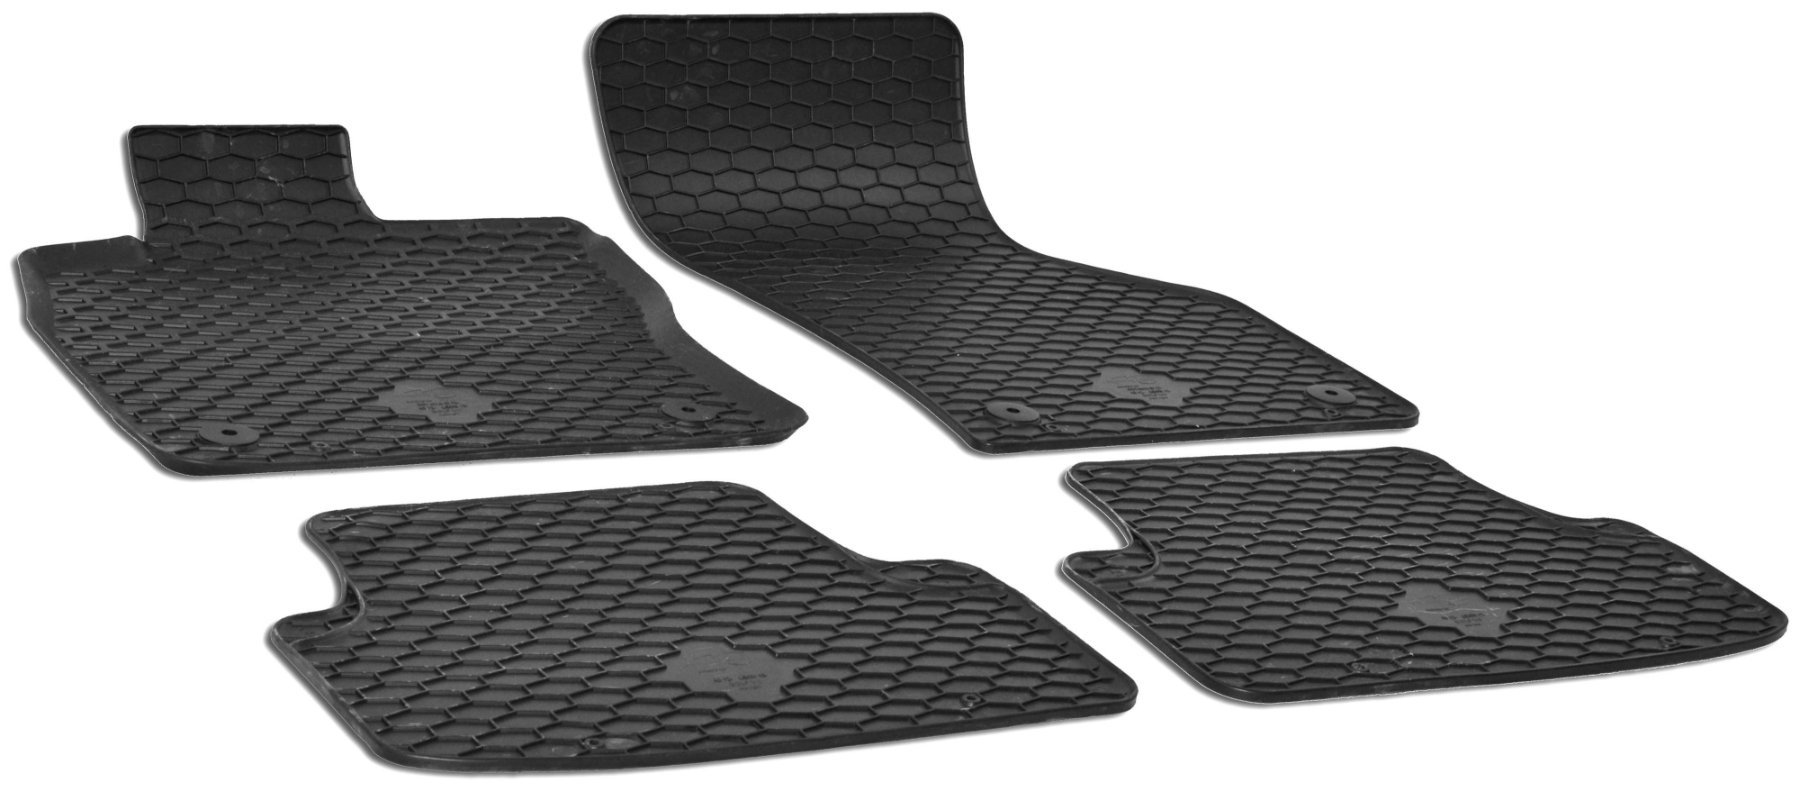 DirtGuard rubberen voetmatten geschikt voor Audi A3, VW Golf VII/Golf VII Variant, VW Golf VIII/Golf VIII Variant, Seat Leon